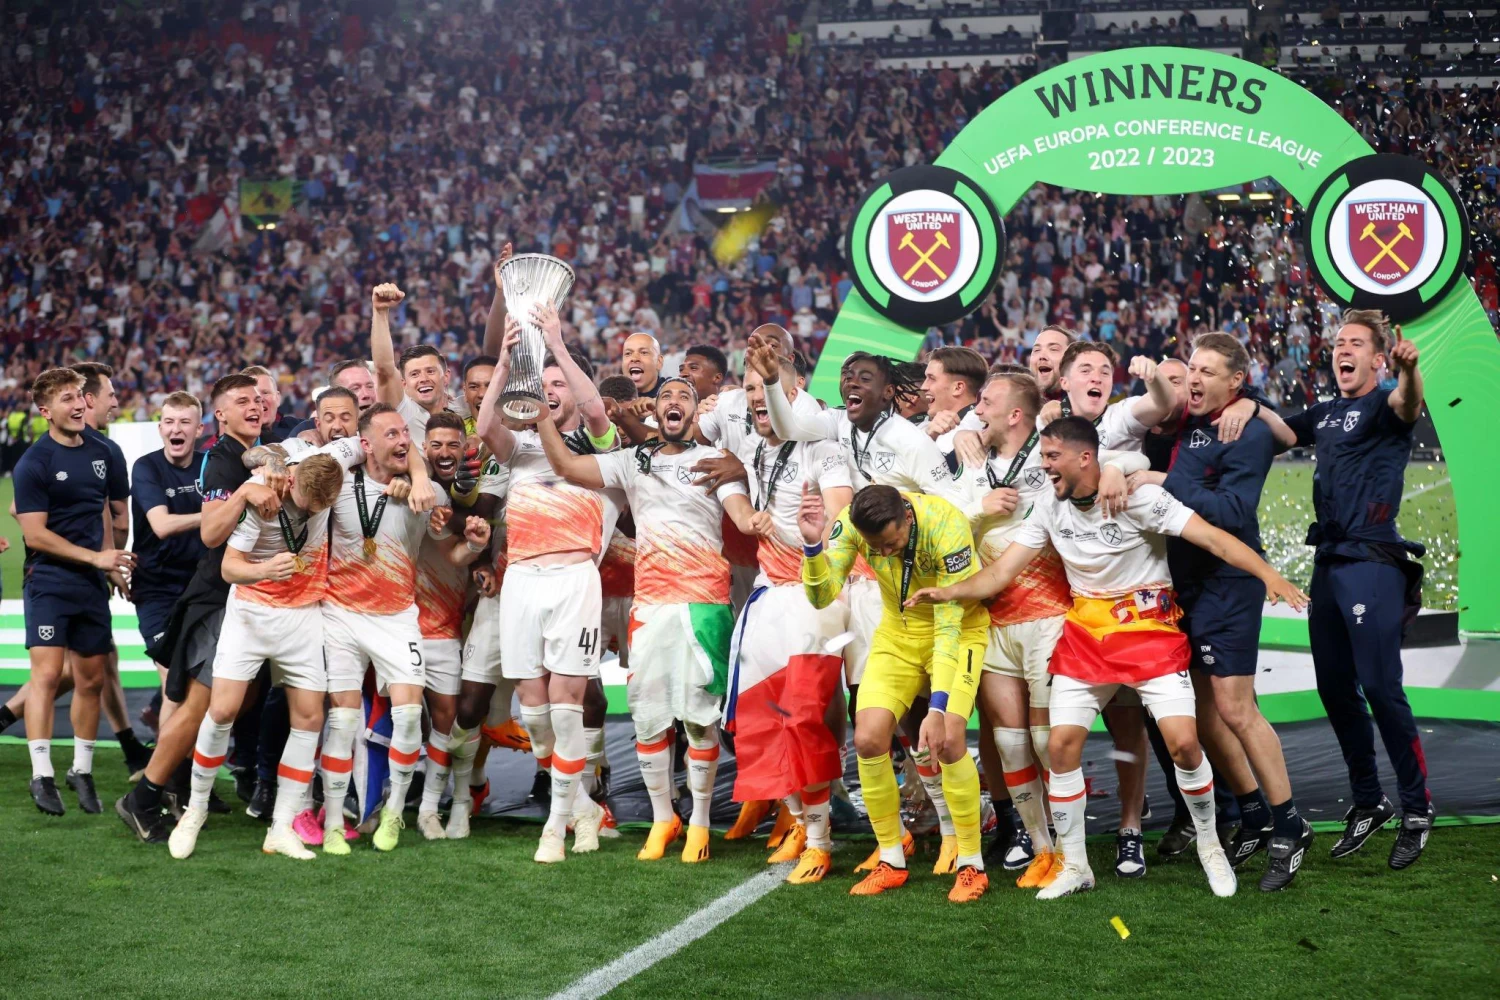 UEFA Avrupa Konferans Ligi'nde şampiyon West Ham United oldu